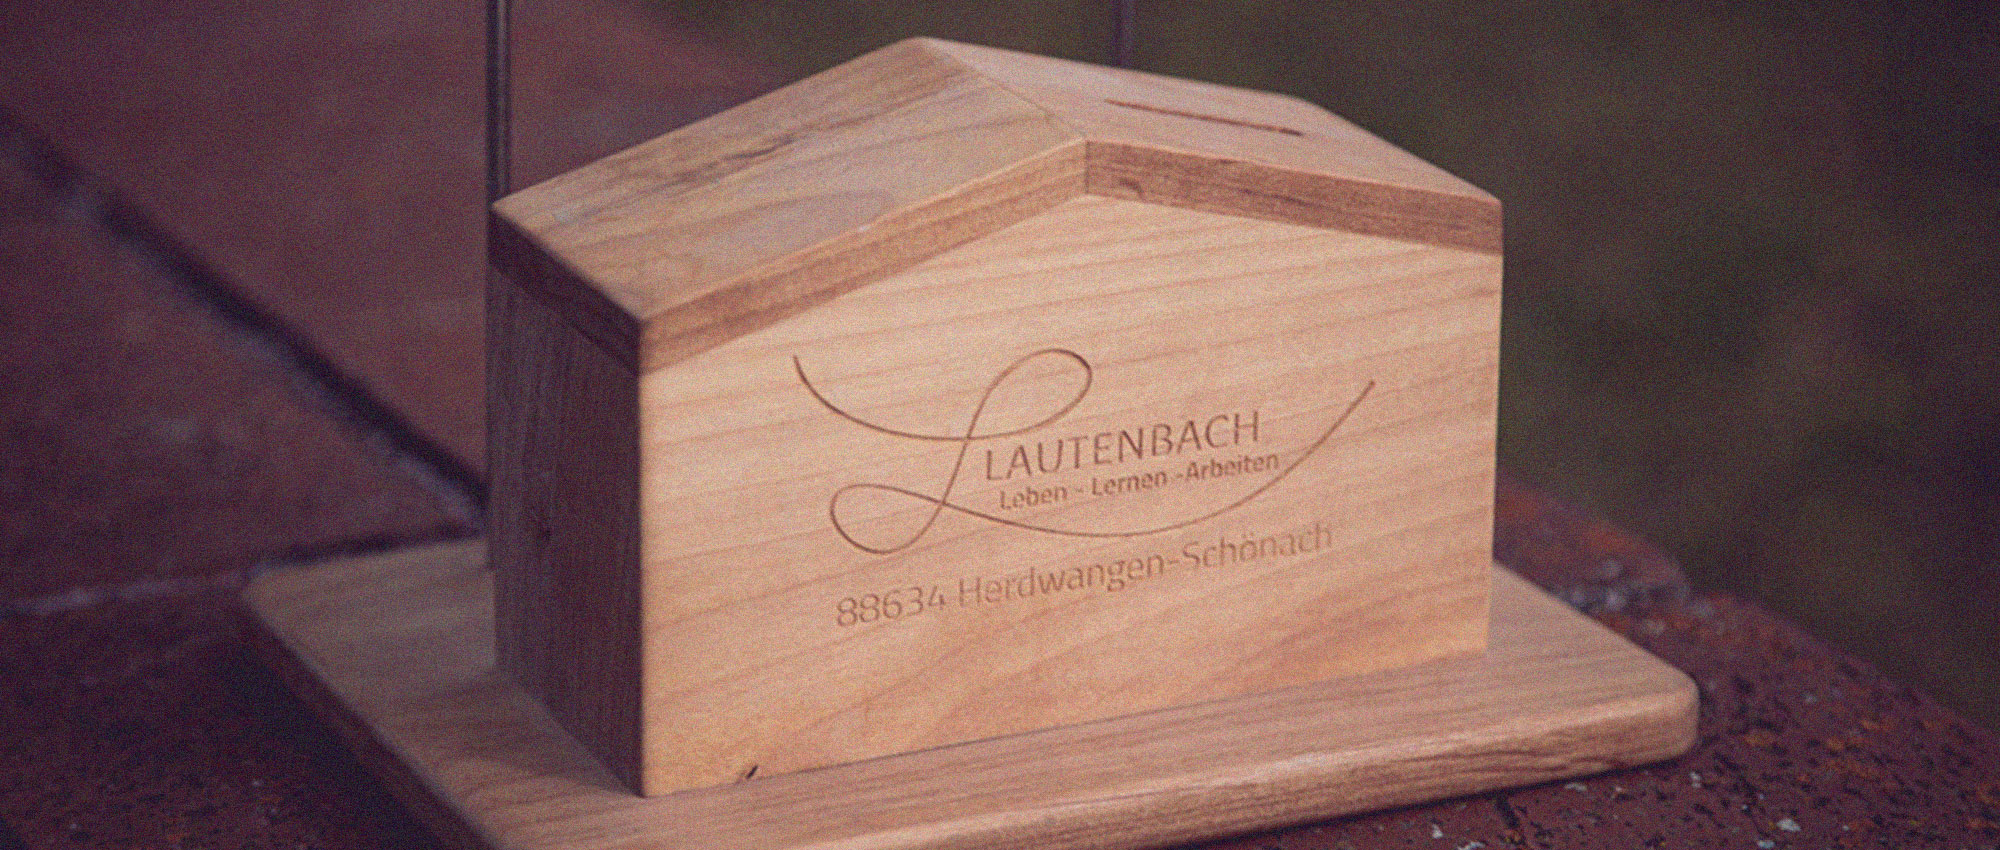 Lautenbach Website Spenden